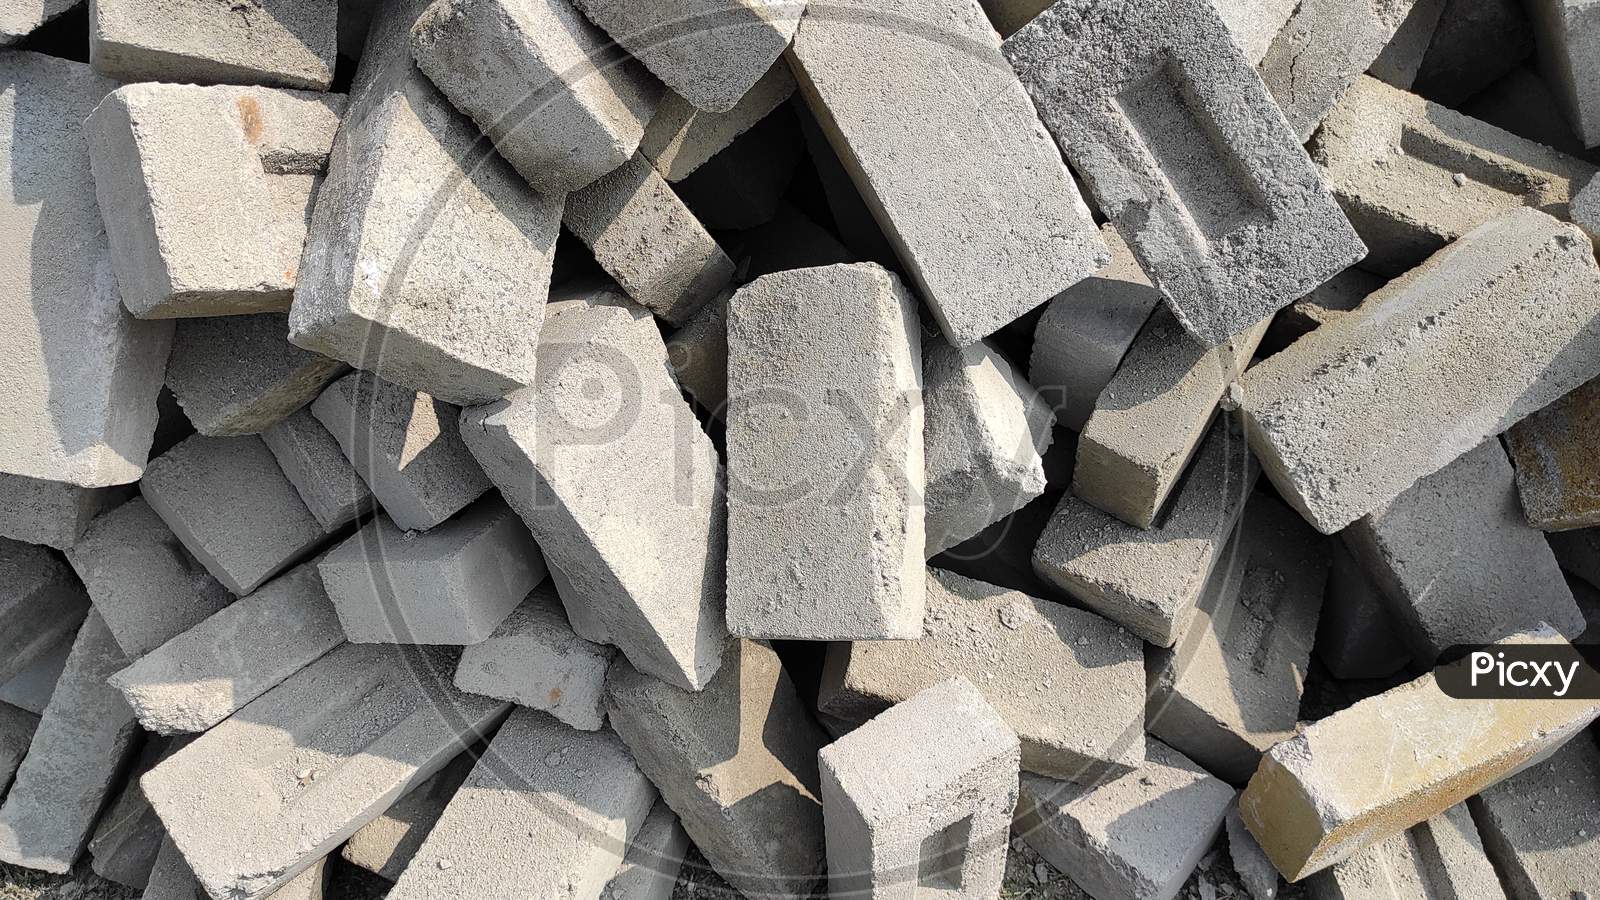 Pile of Cement bricks block or concrete construction materials